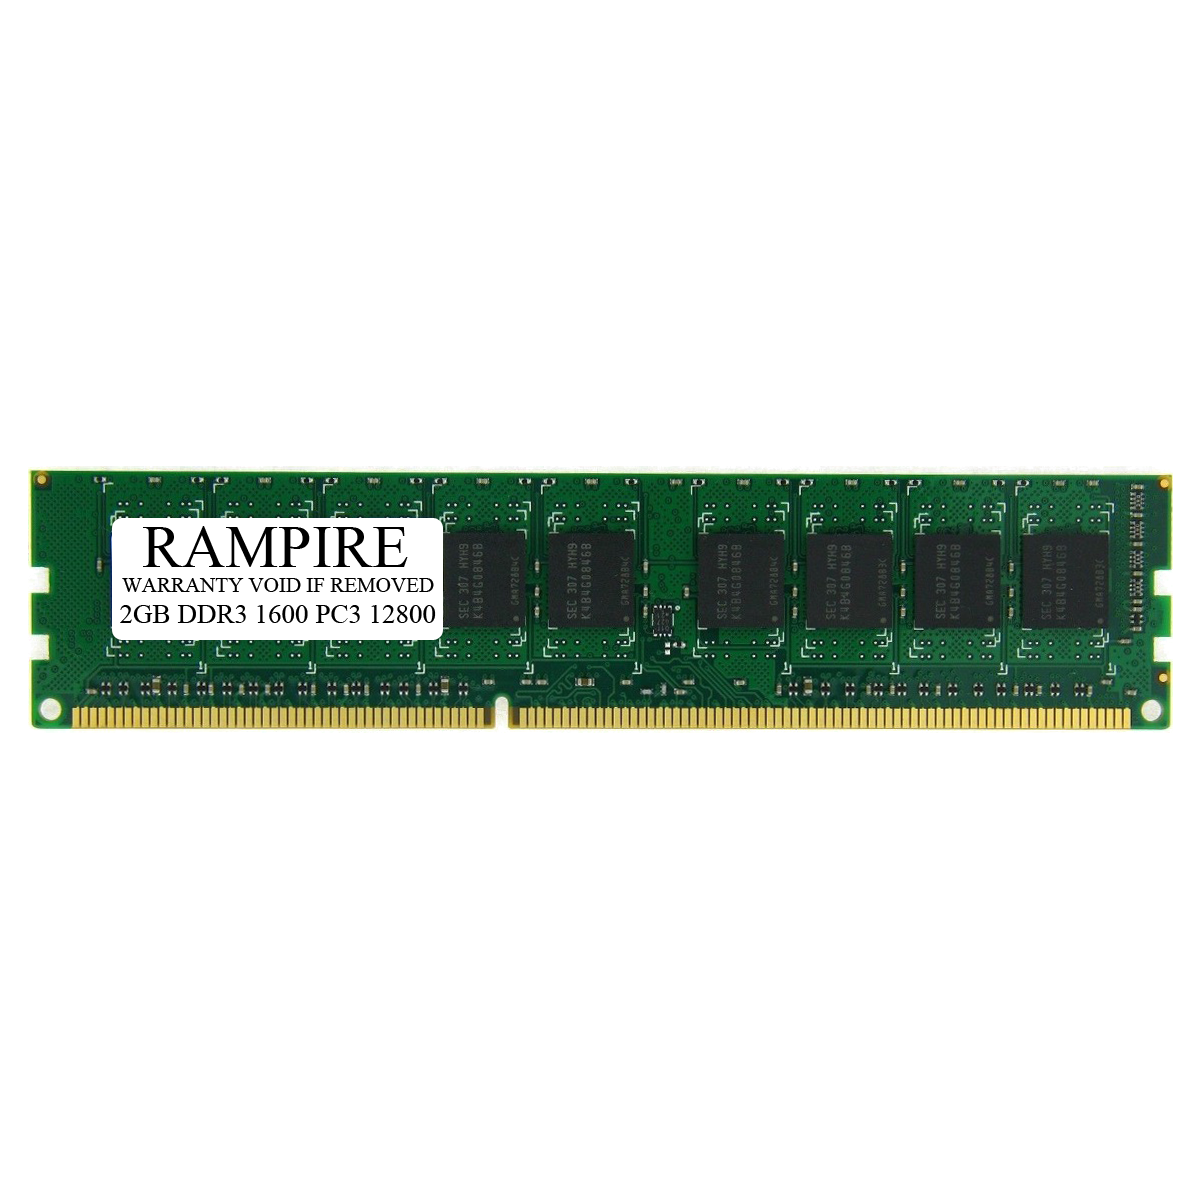 RAMPIRE 2GB DDR3 1600 (PC3 12800) 240-Pin SDRAM 2Rx8 Standard Profile 1.5V ECC Unregistered Server Memory